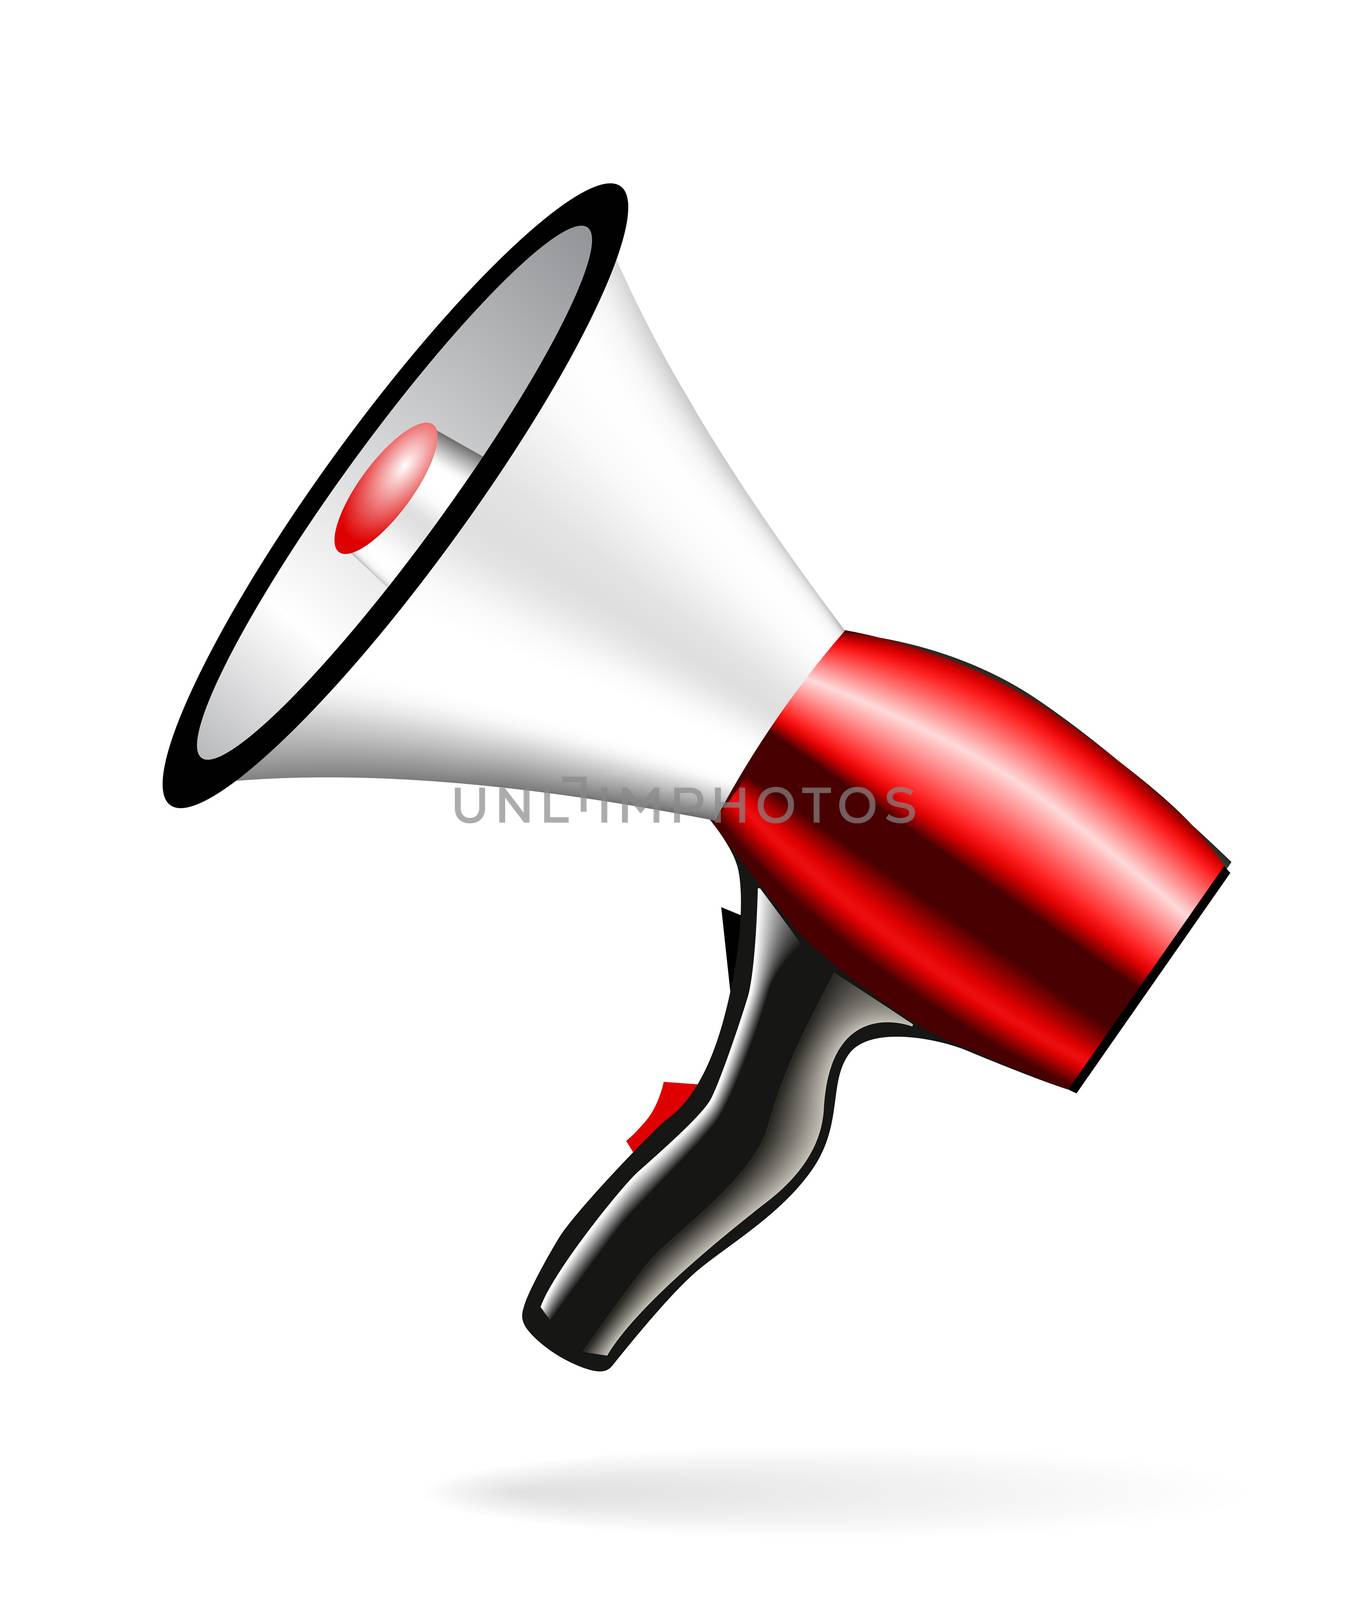 Loudspeaker or megaphone icon isolated on white background.